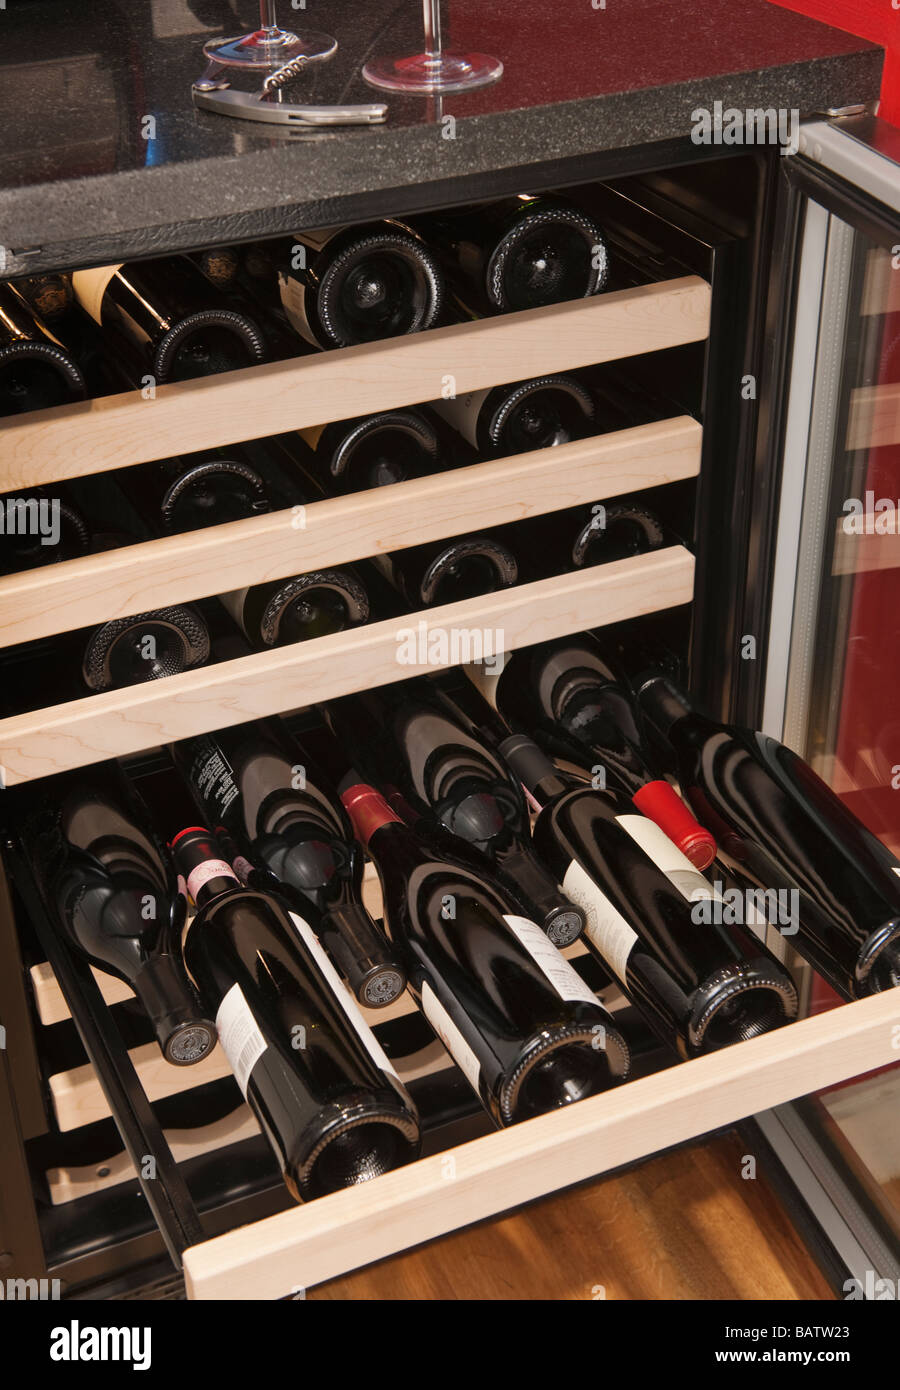 Wine bottles in wine cooler Stock Photo